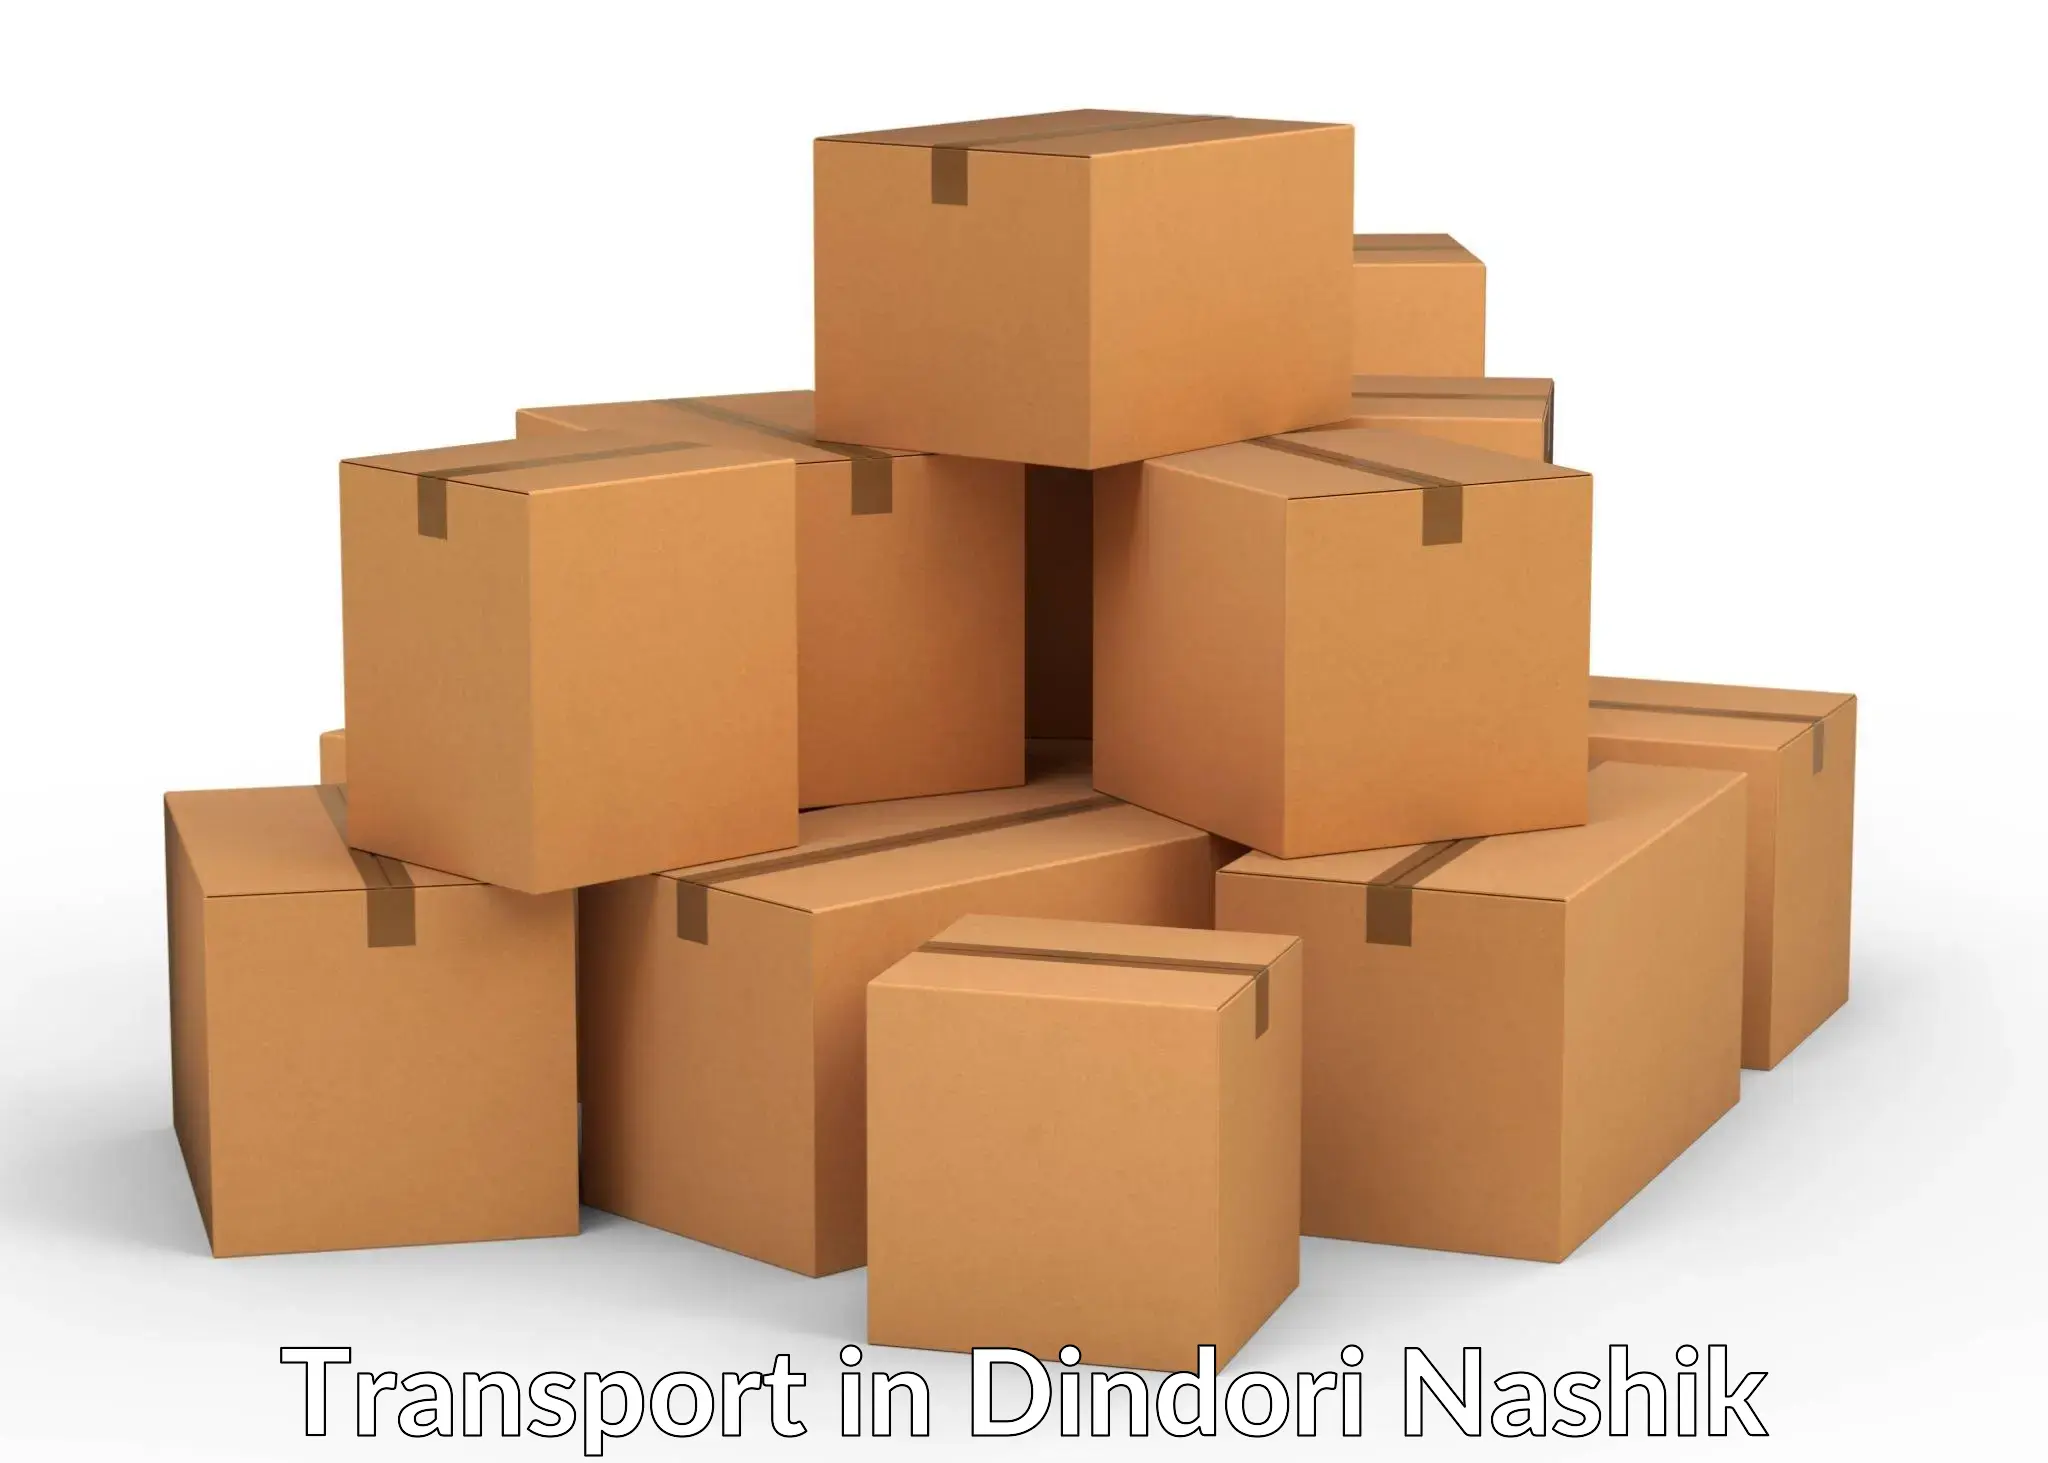 Container transportation services in Dindori Nashik